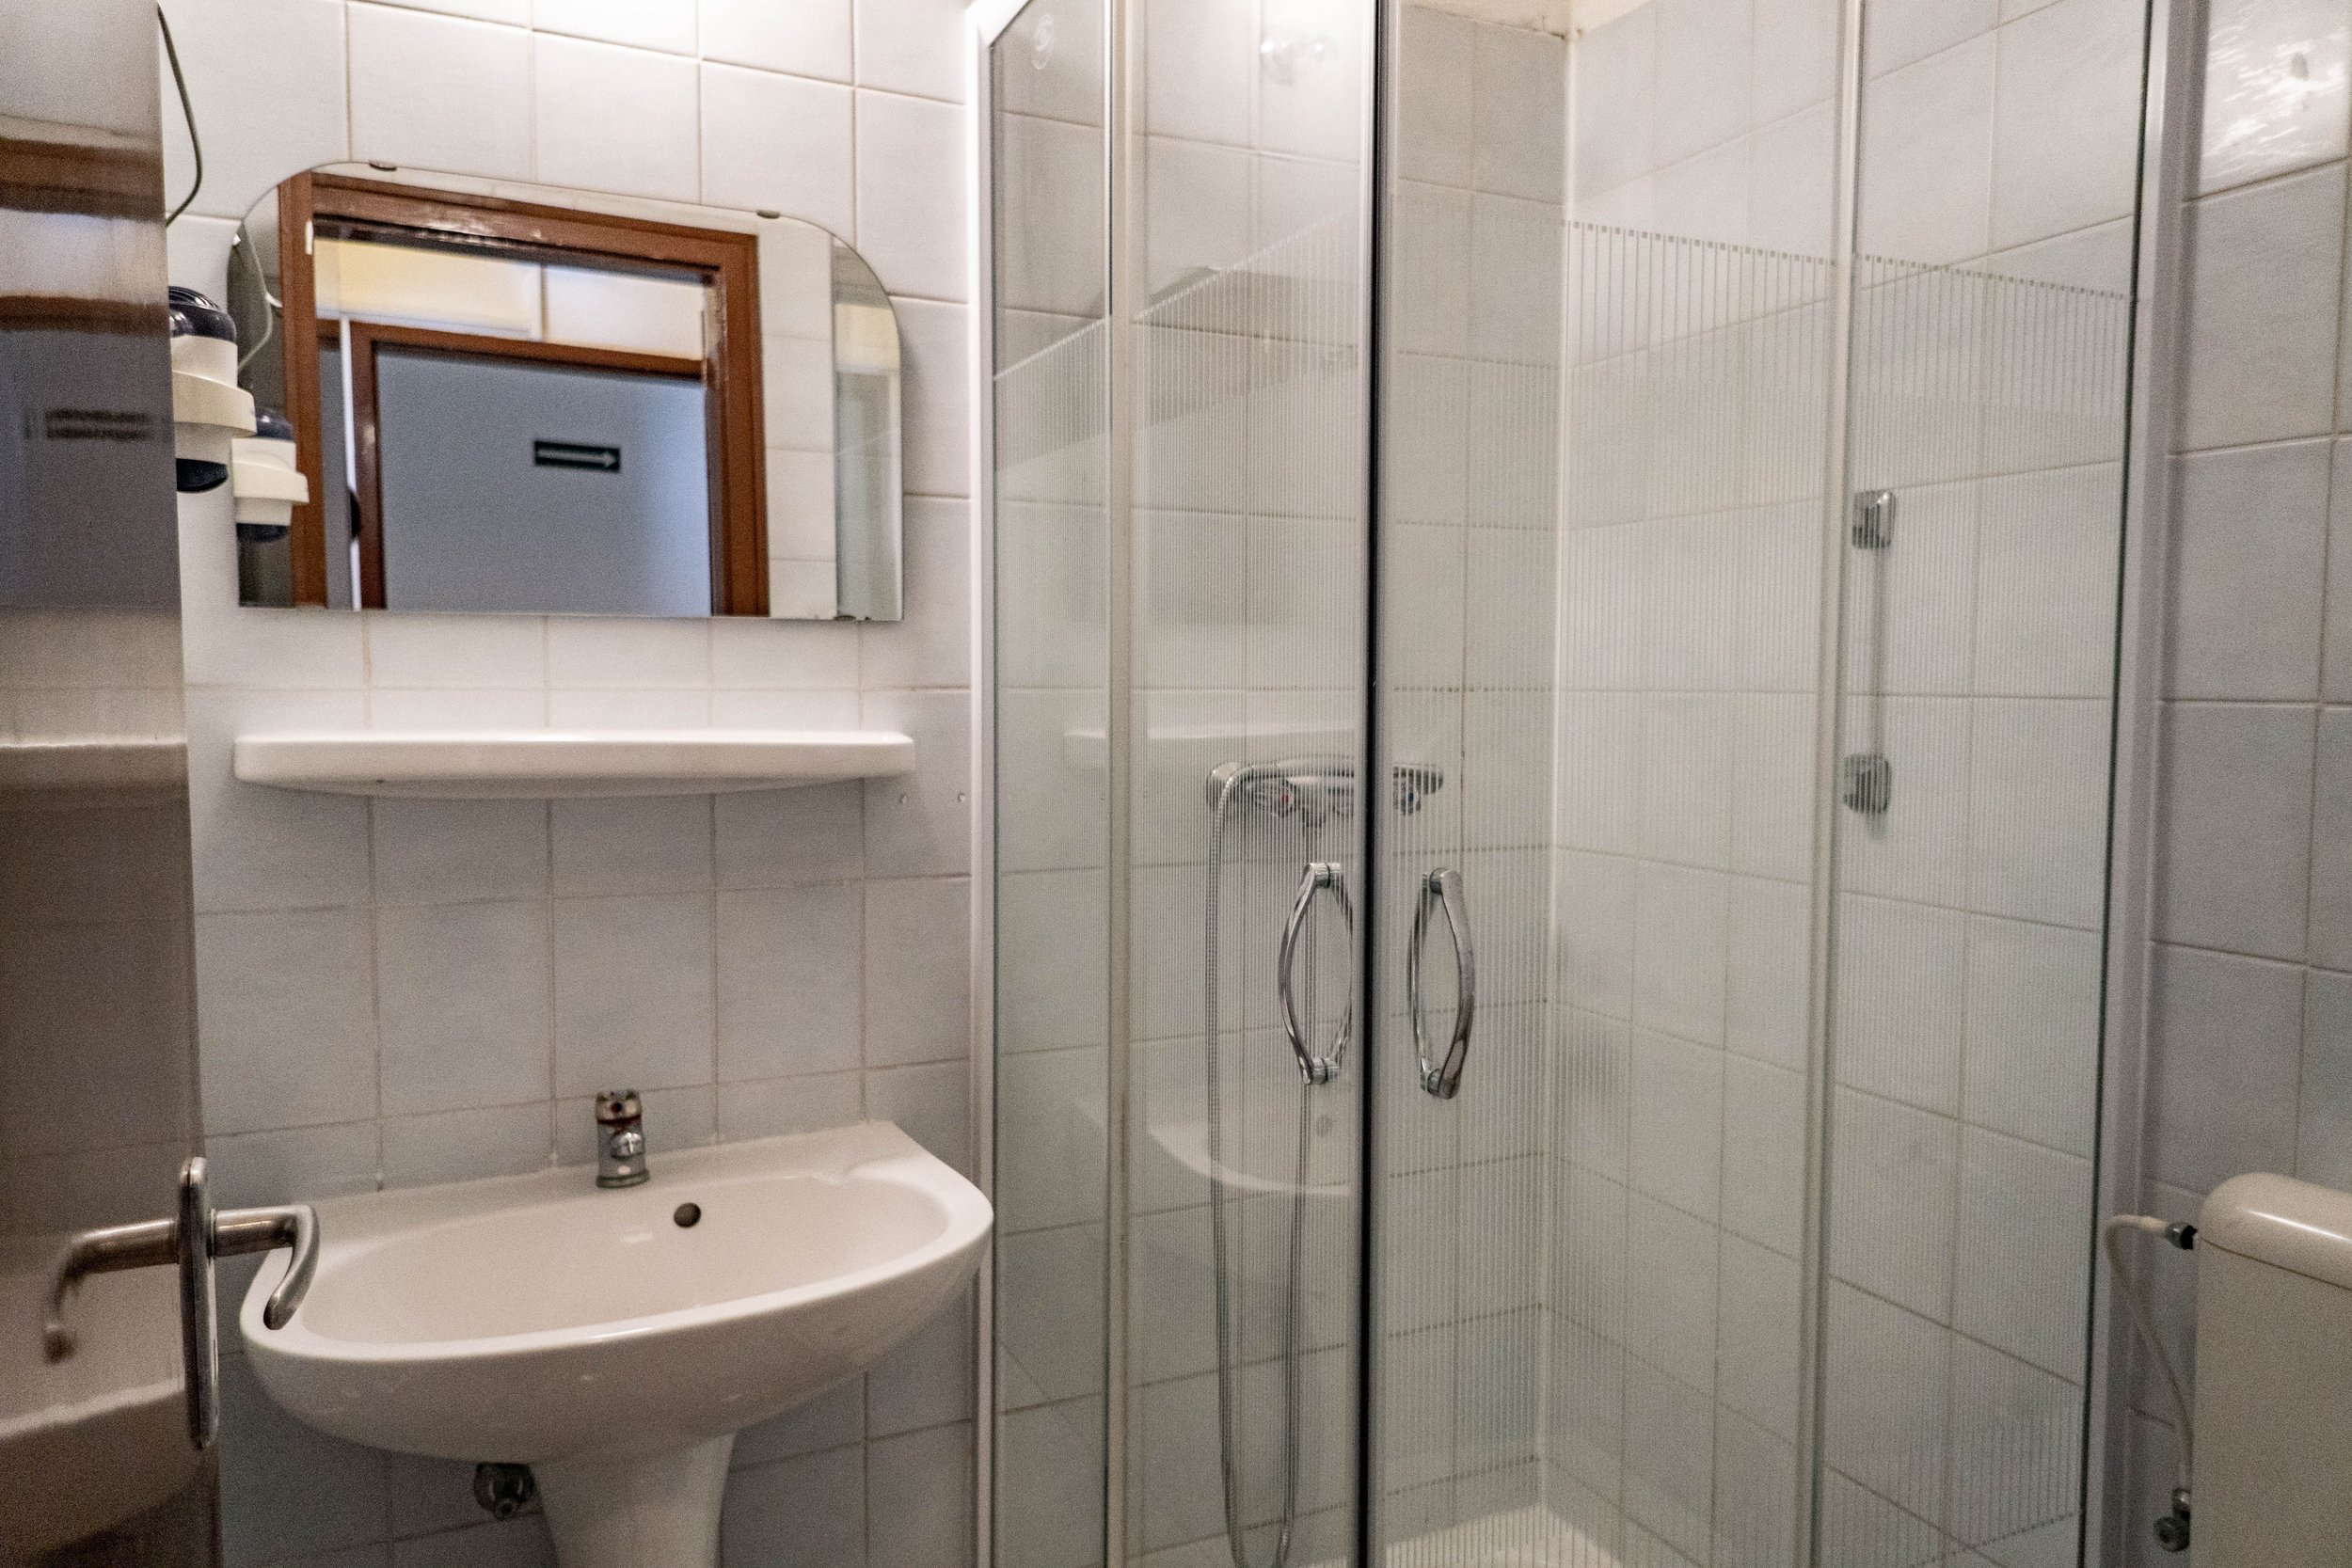 Equity Point Budapest Private Room Bathroom Shower.jpg